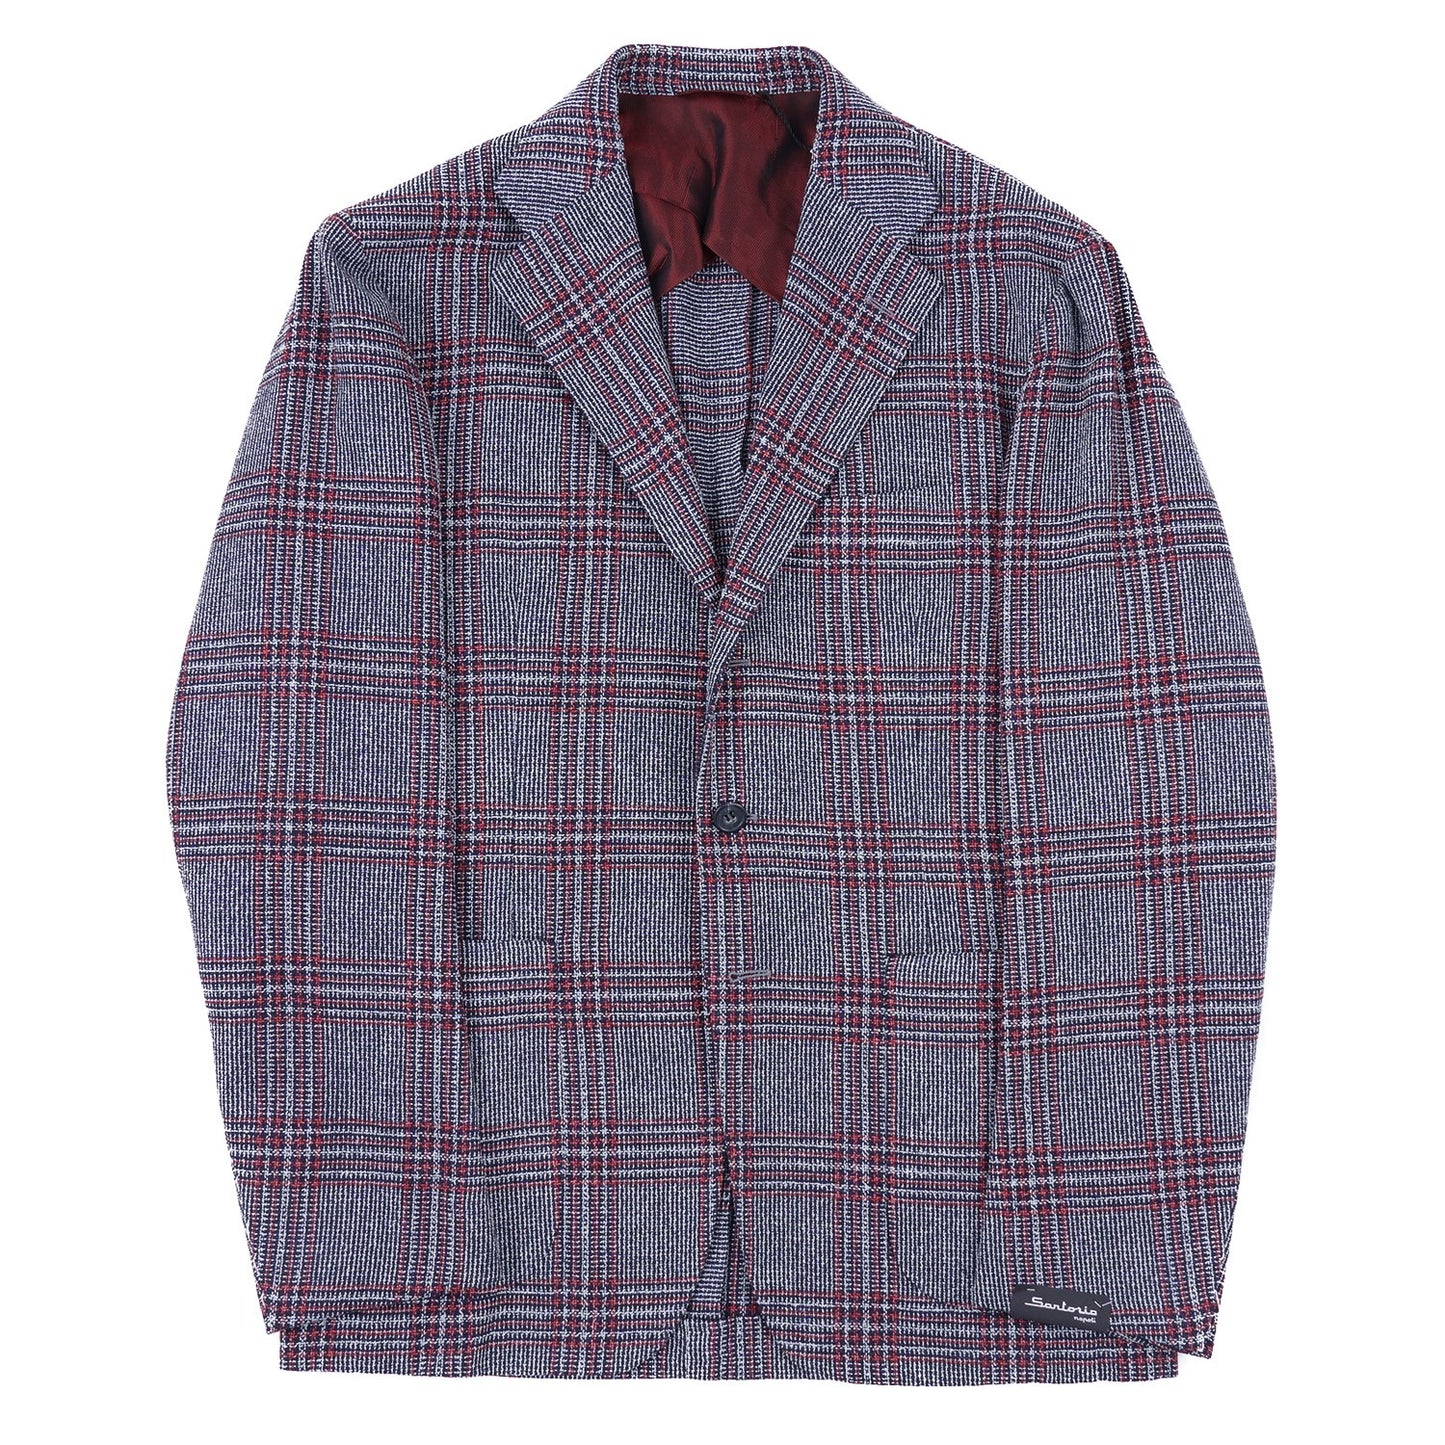 Sartorio Wool Silk and Linen Sport Coat - Top Shelf Apparel